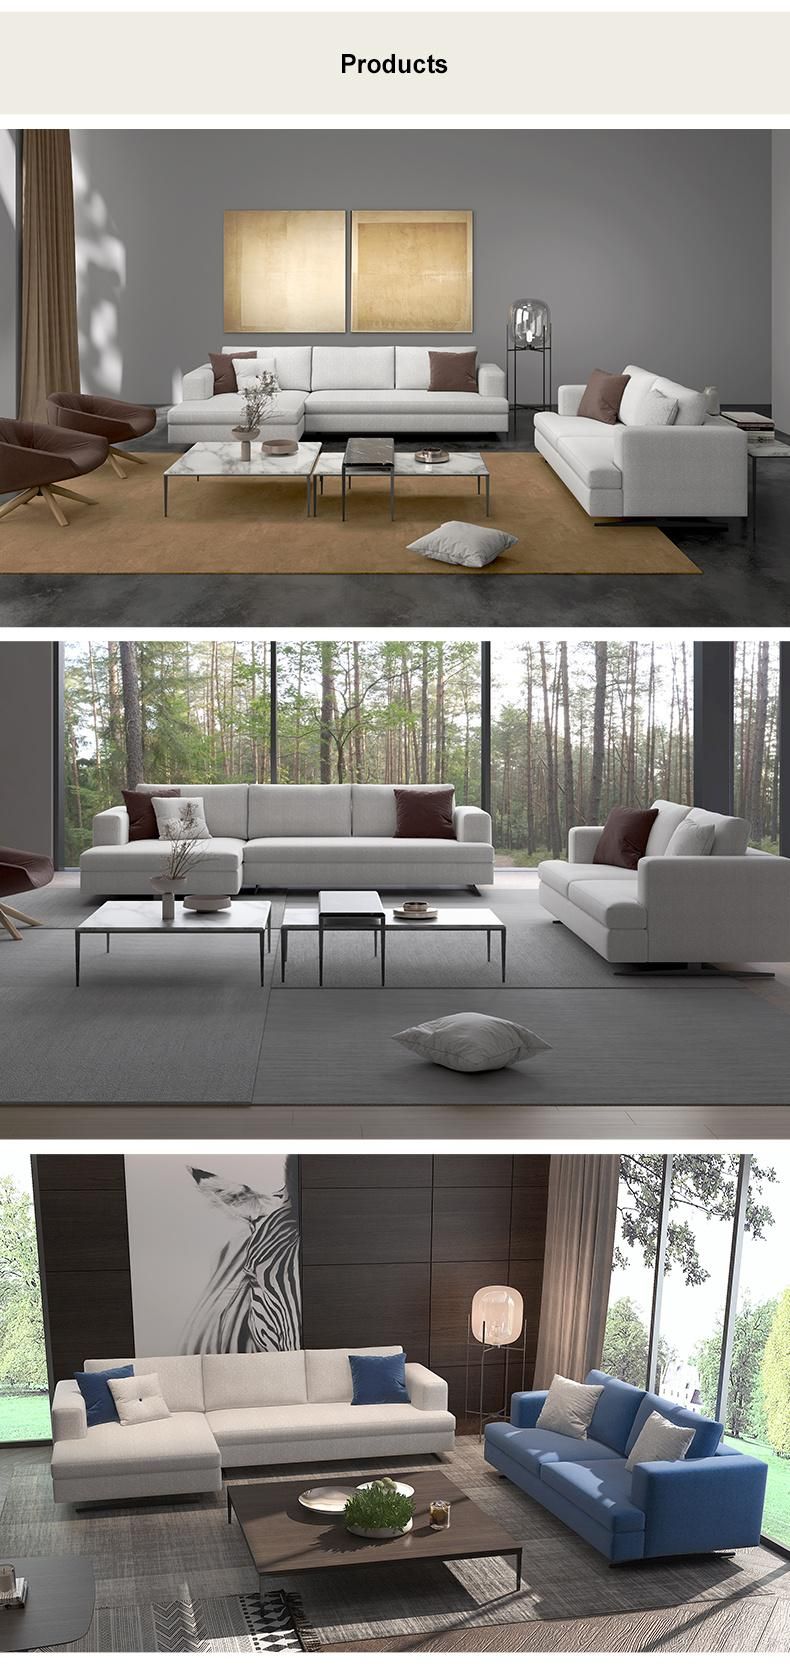 Home Modern Leisure Recliner Living Room Furniture Sofa Hot